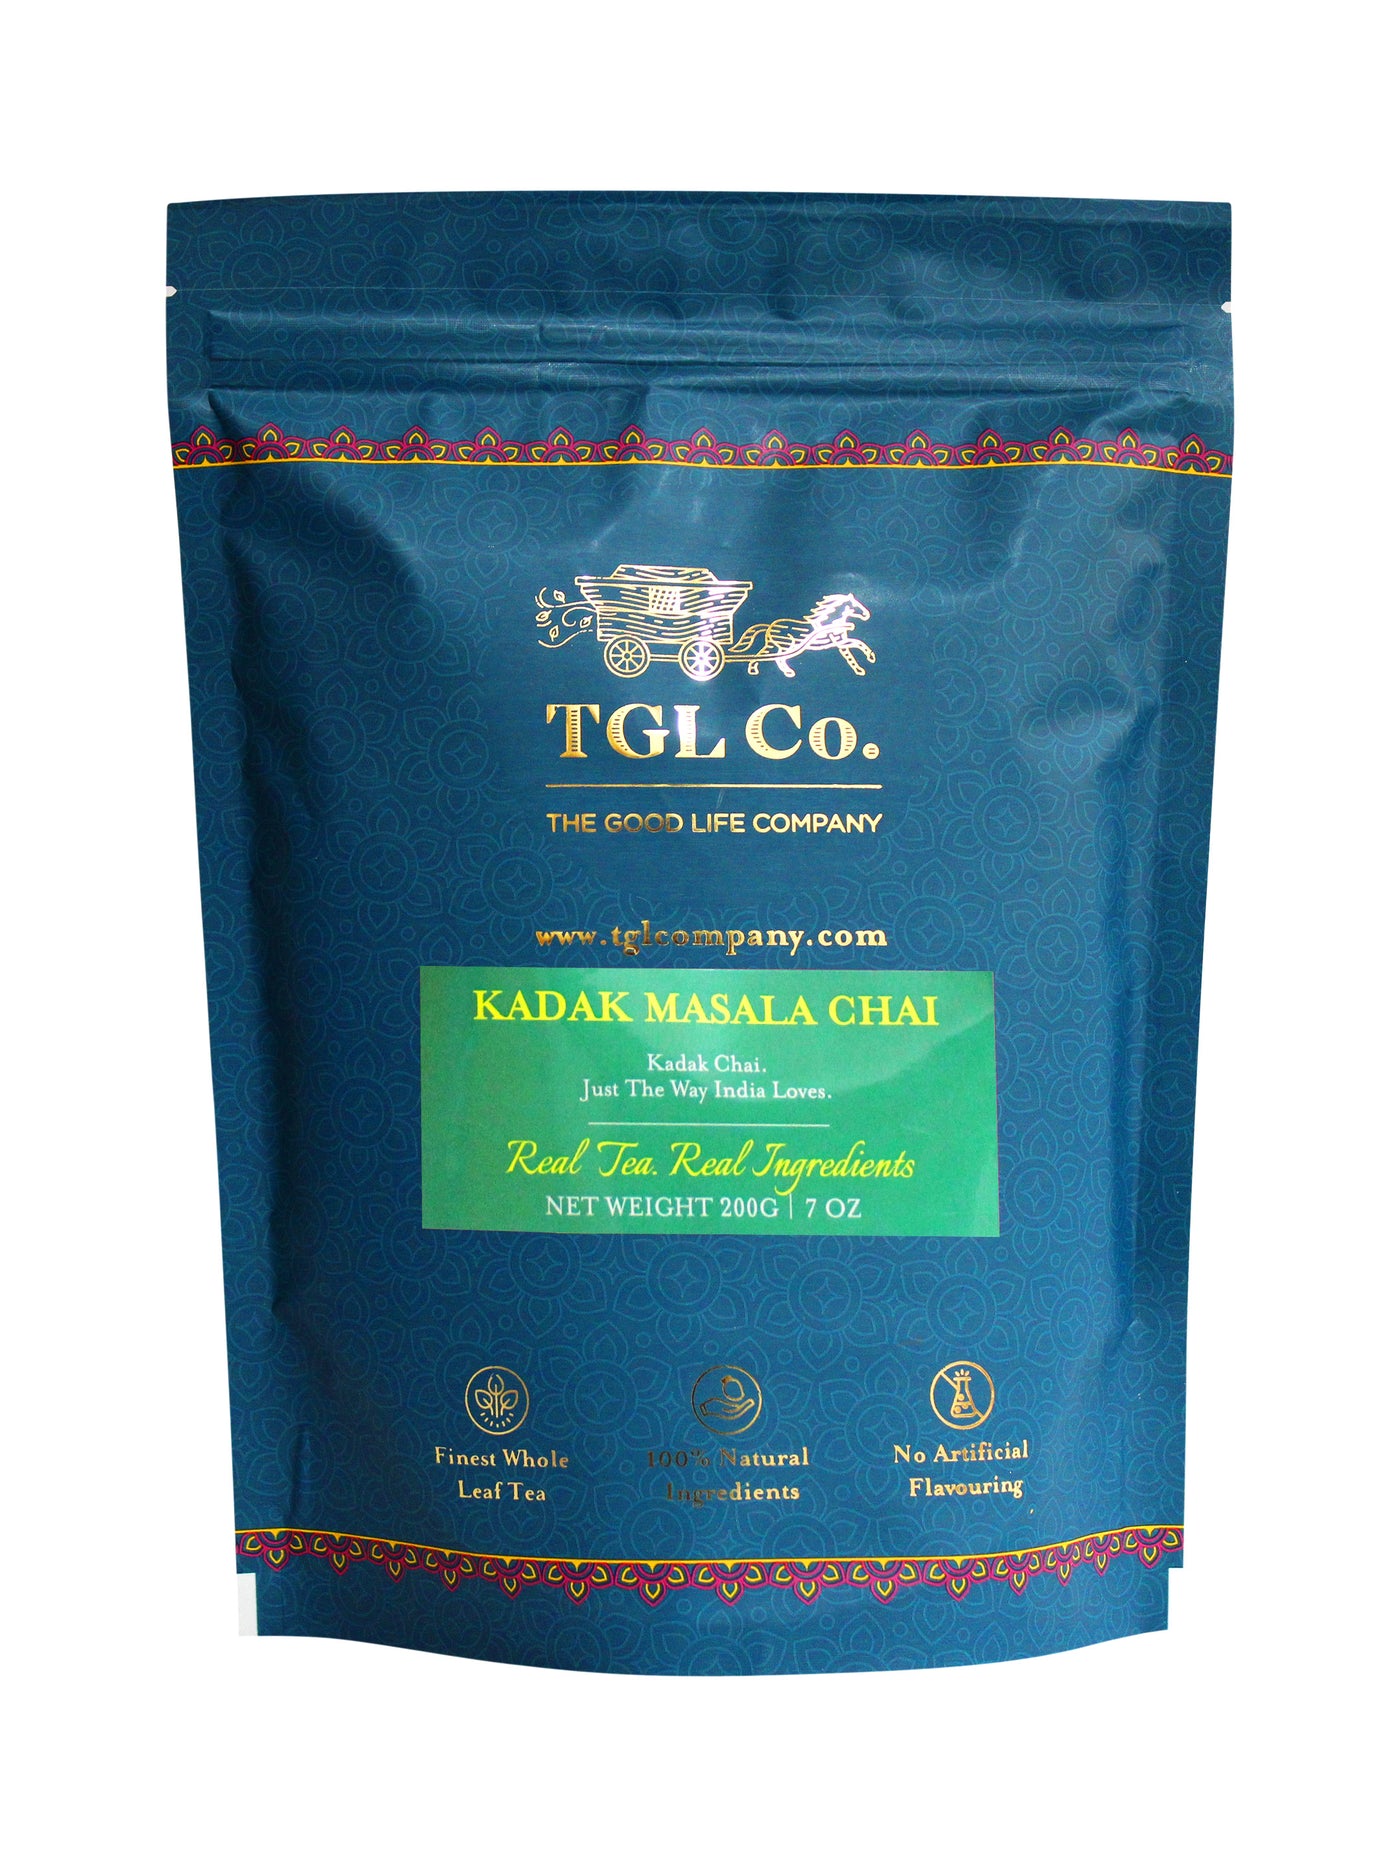 Kadak Masala Chai Tea Loose Leaf Tea